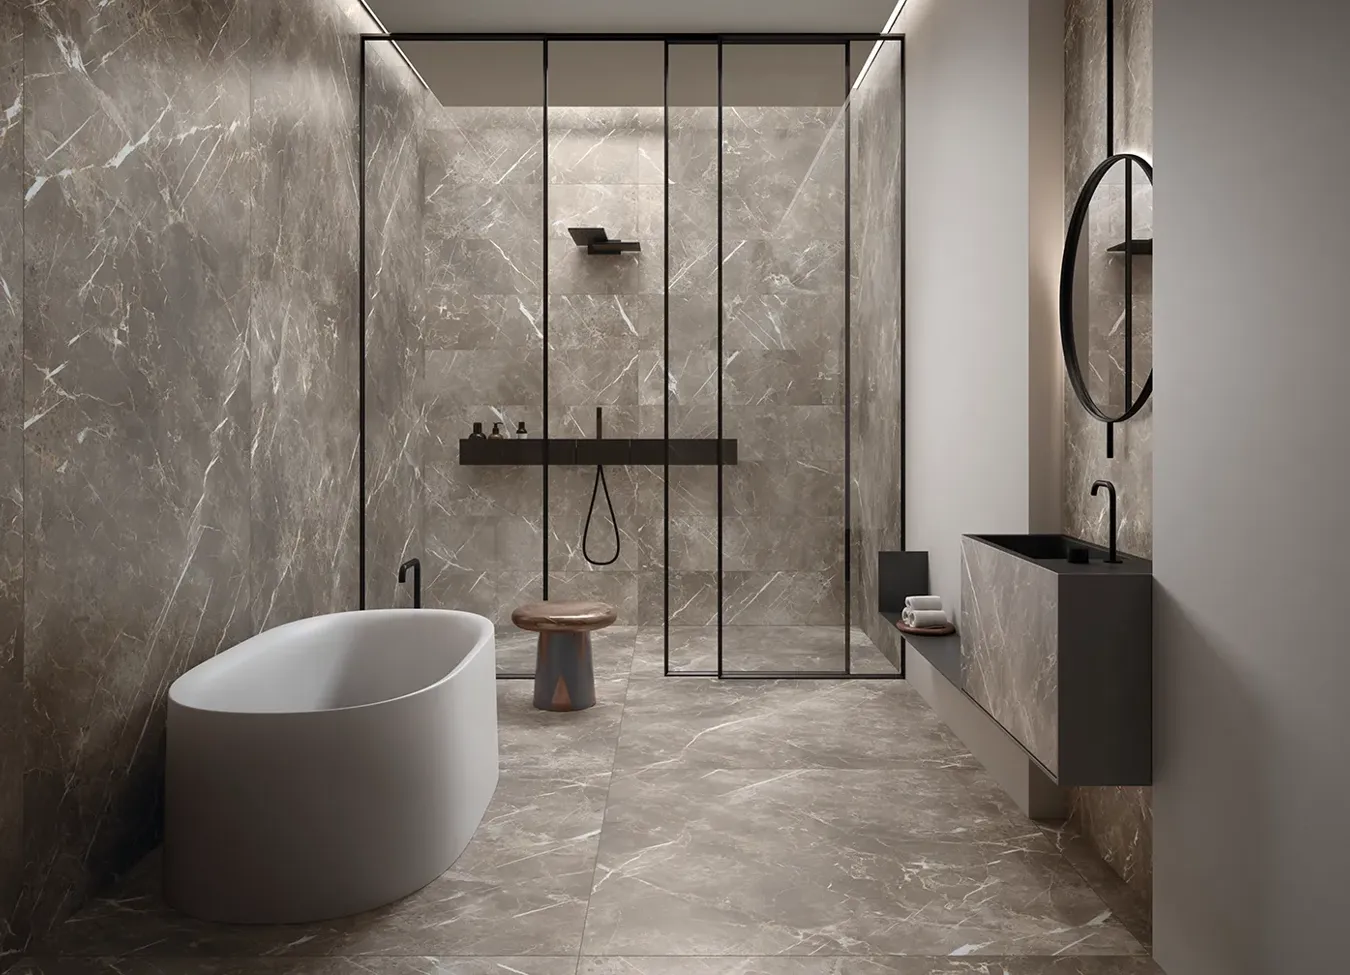 Elegant bathroom with freestanding tub, shower tray in large porcelain stoneware slabs, and black finish details.